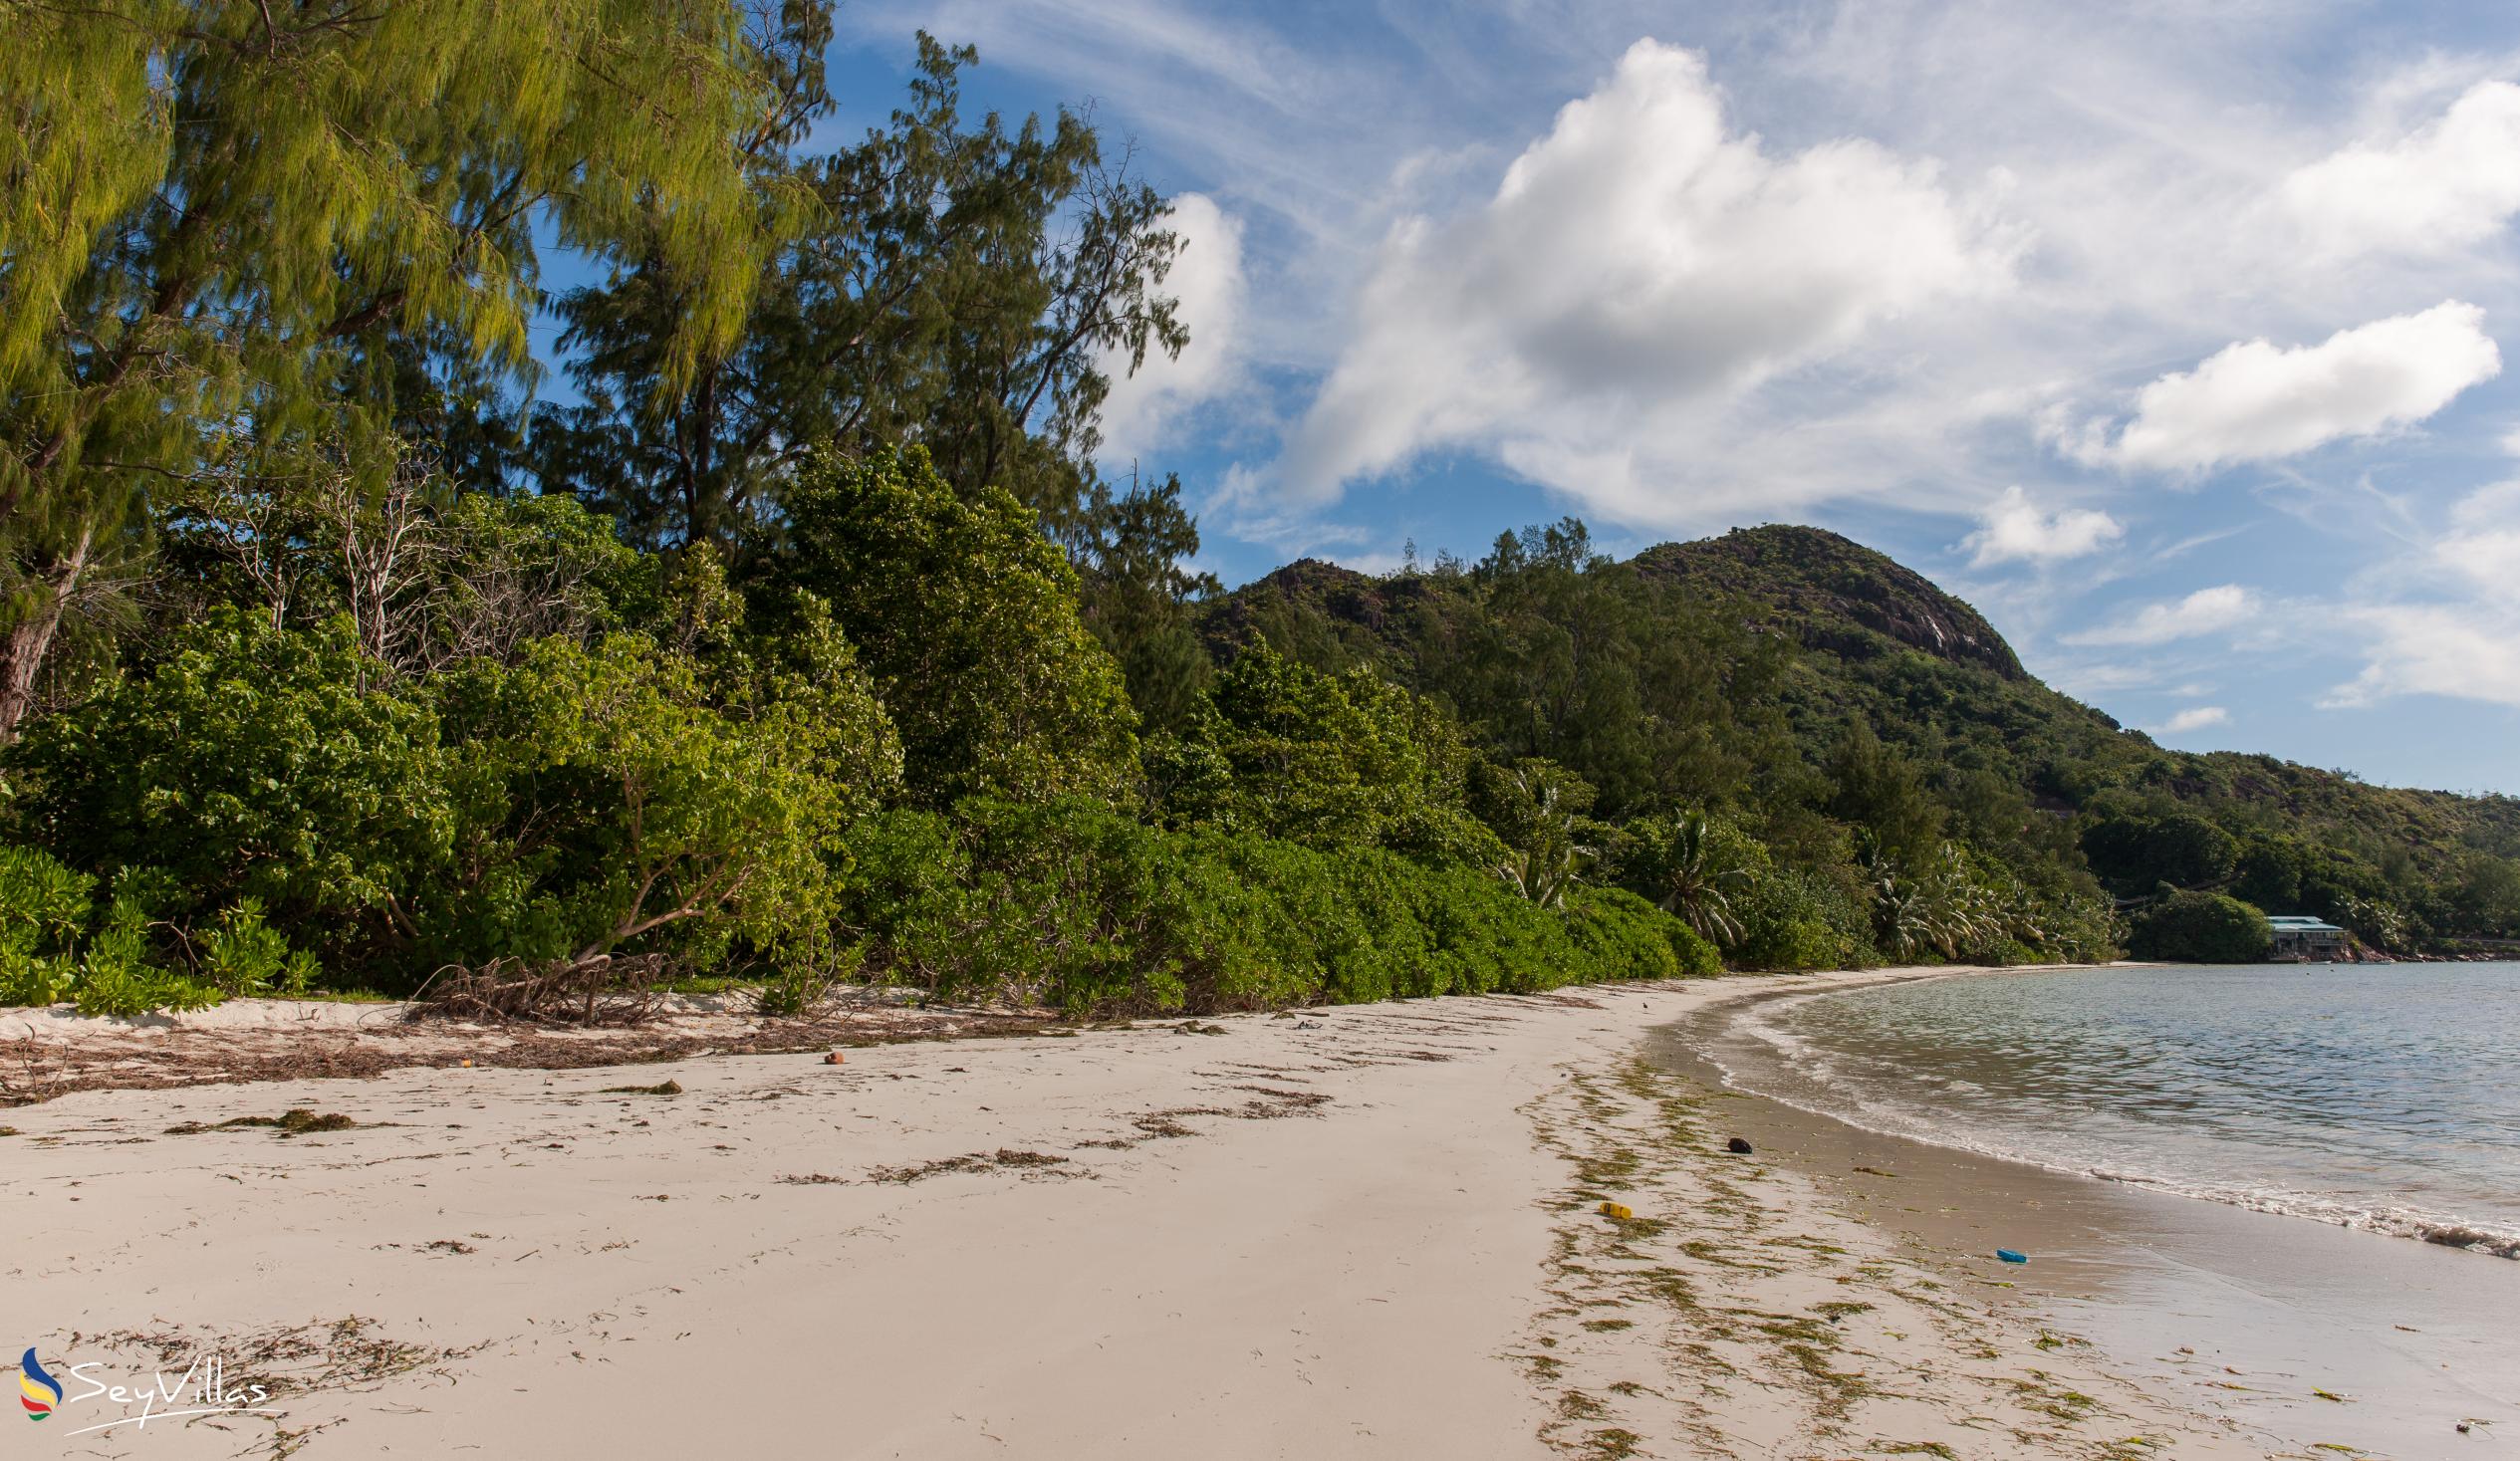 Photo 3: Anse Madge - Praslin (Seychelles)